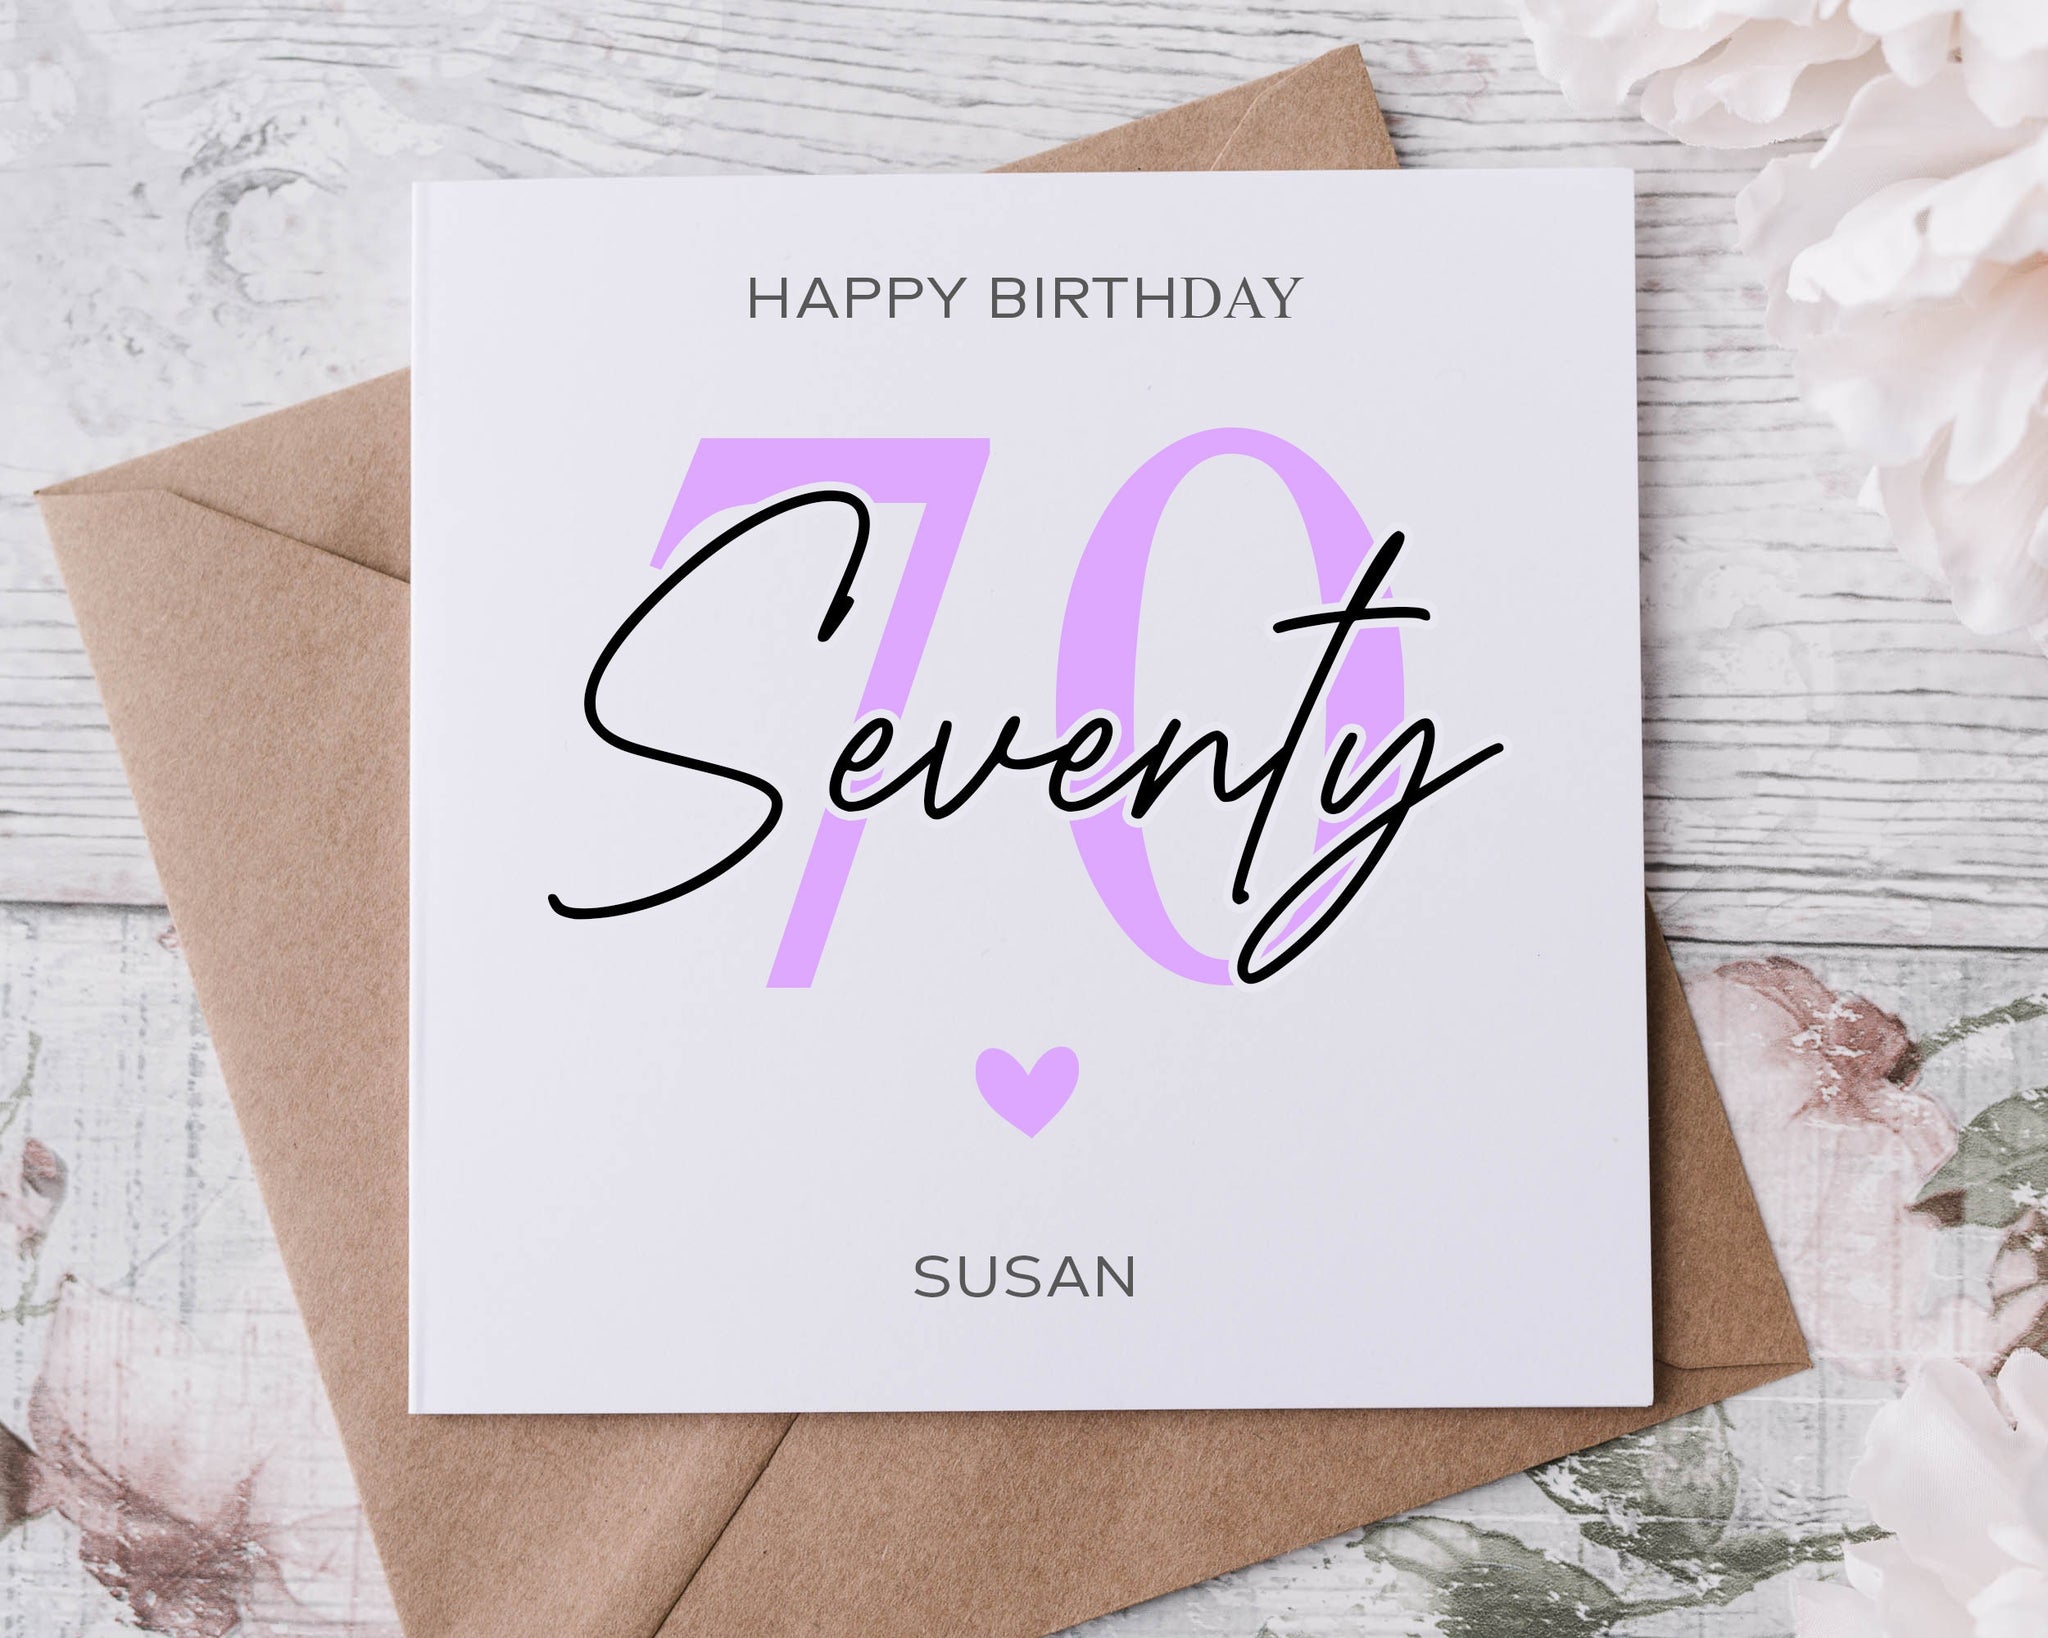 First Name SUSAN, Fun HAPPY BIRTHDAY Square Sticker